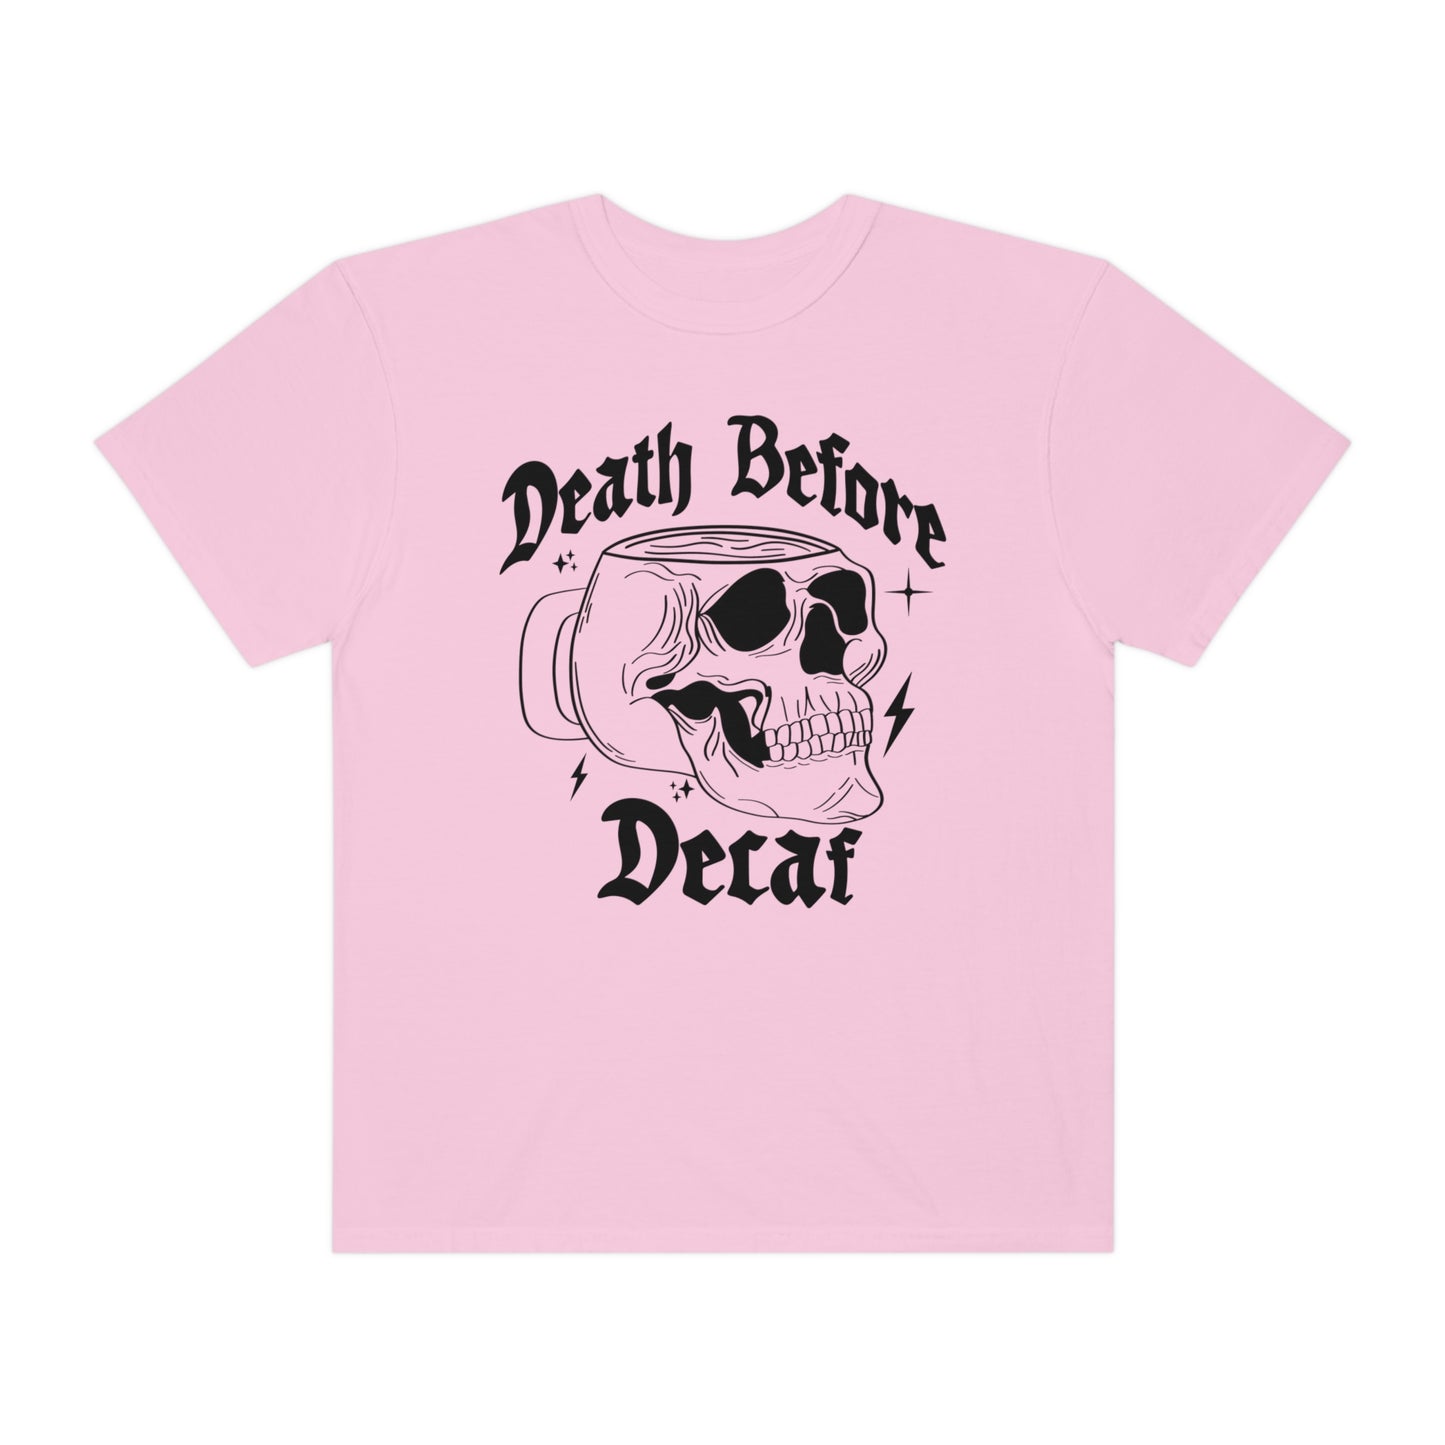 Death Before Decaf Shirt